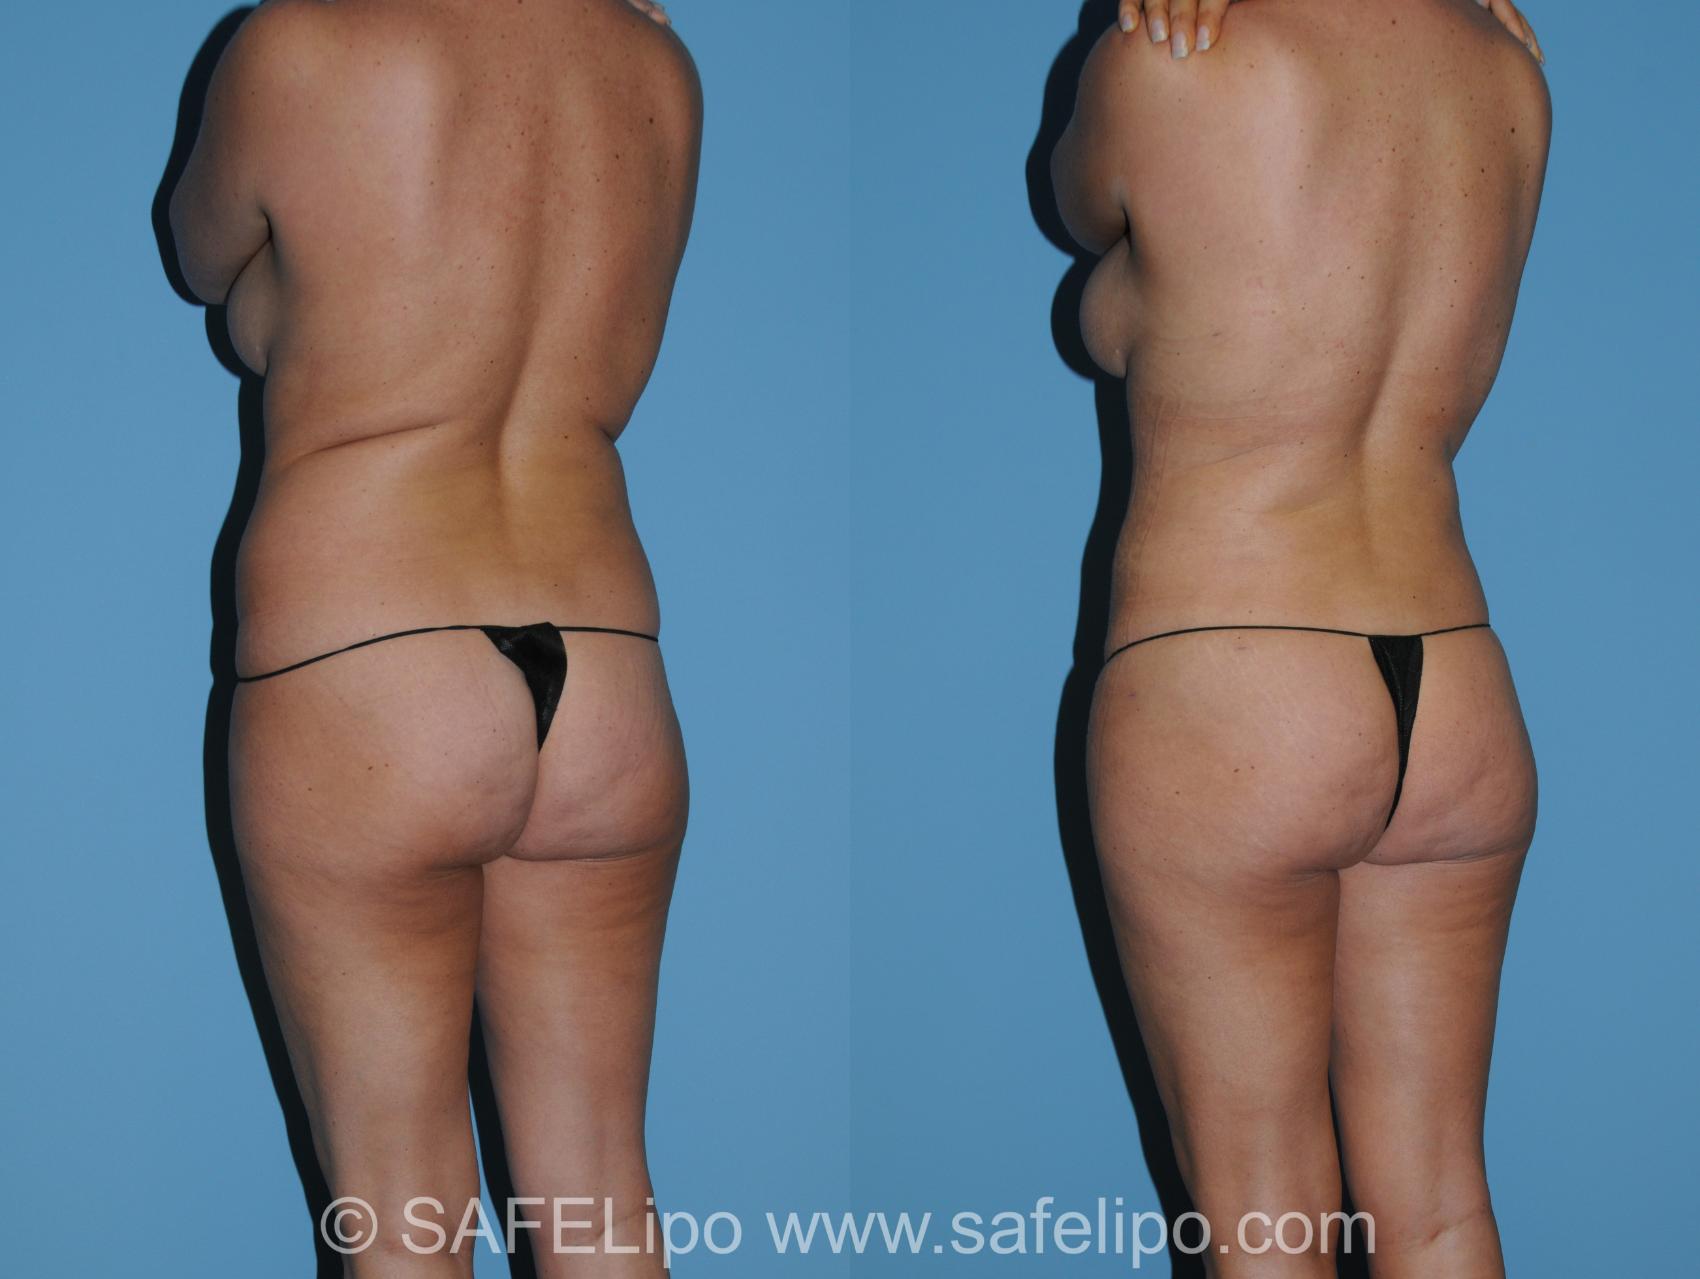 SAFELipoHD® Case 340 Before & After View #6 | SAFELipo®